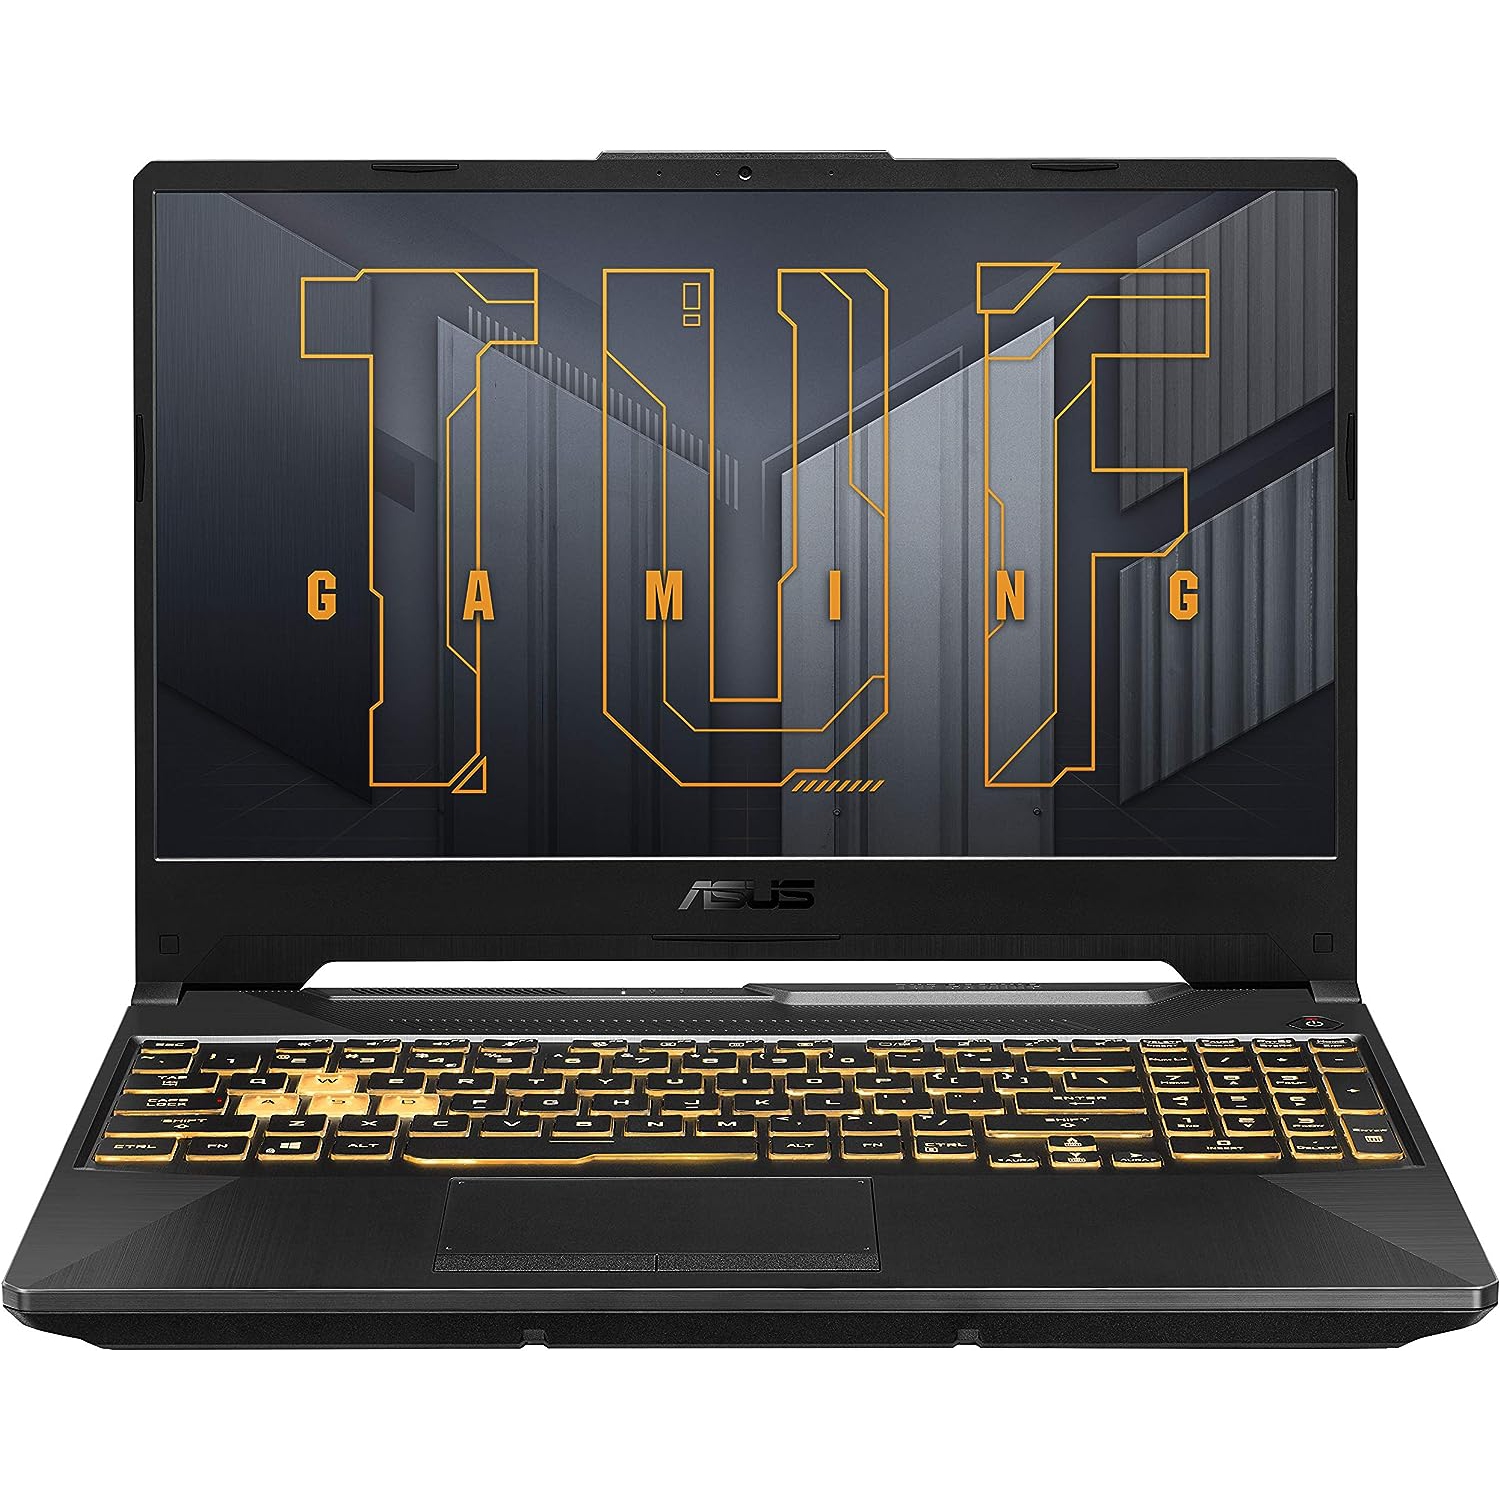 ASUS TUF F15 Gaming Laptop, 15.6” 144Hz FHD IPS-Type Display, Intel Core i5-11400H Processor, GeForce RTX 3050, 8GB DDR4 RAM, 512GB PCIe SSD